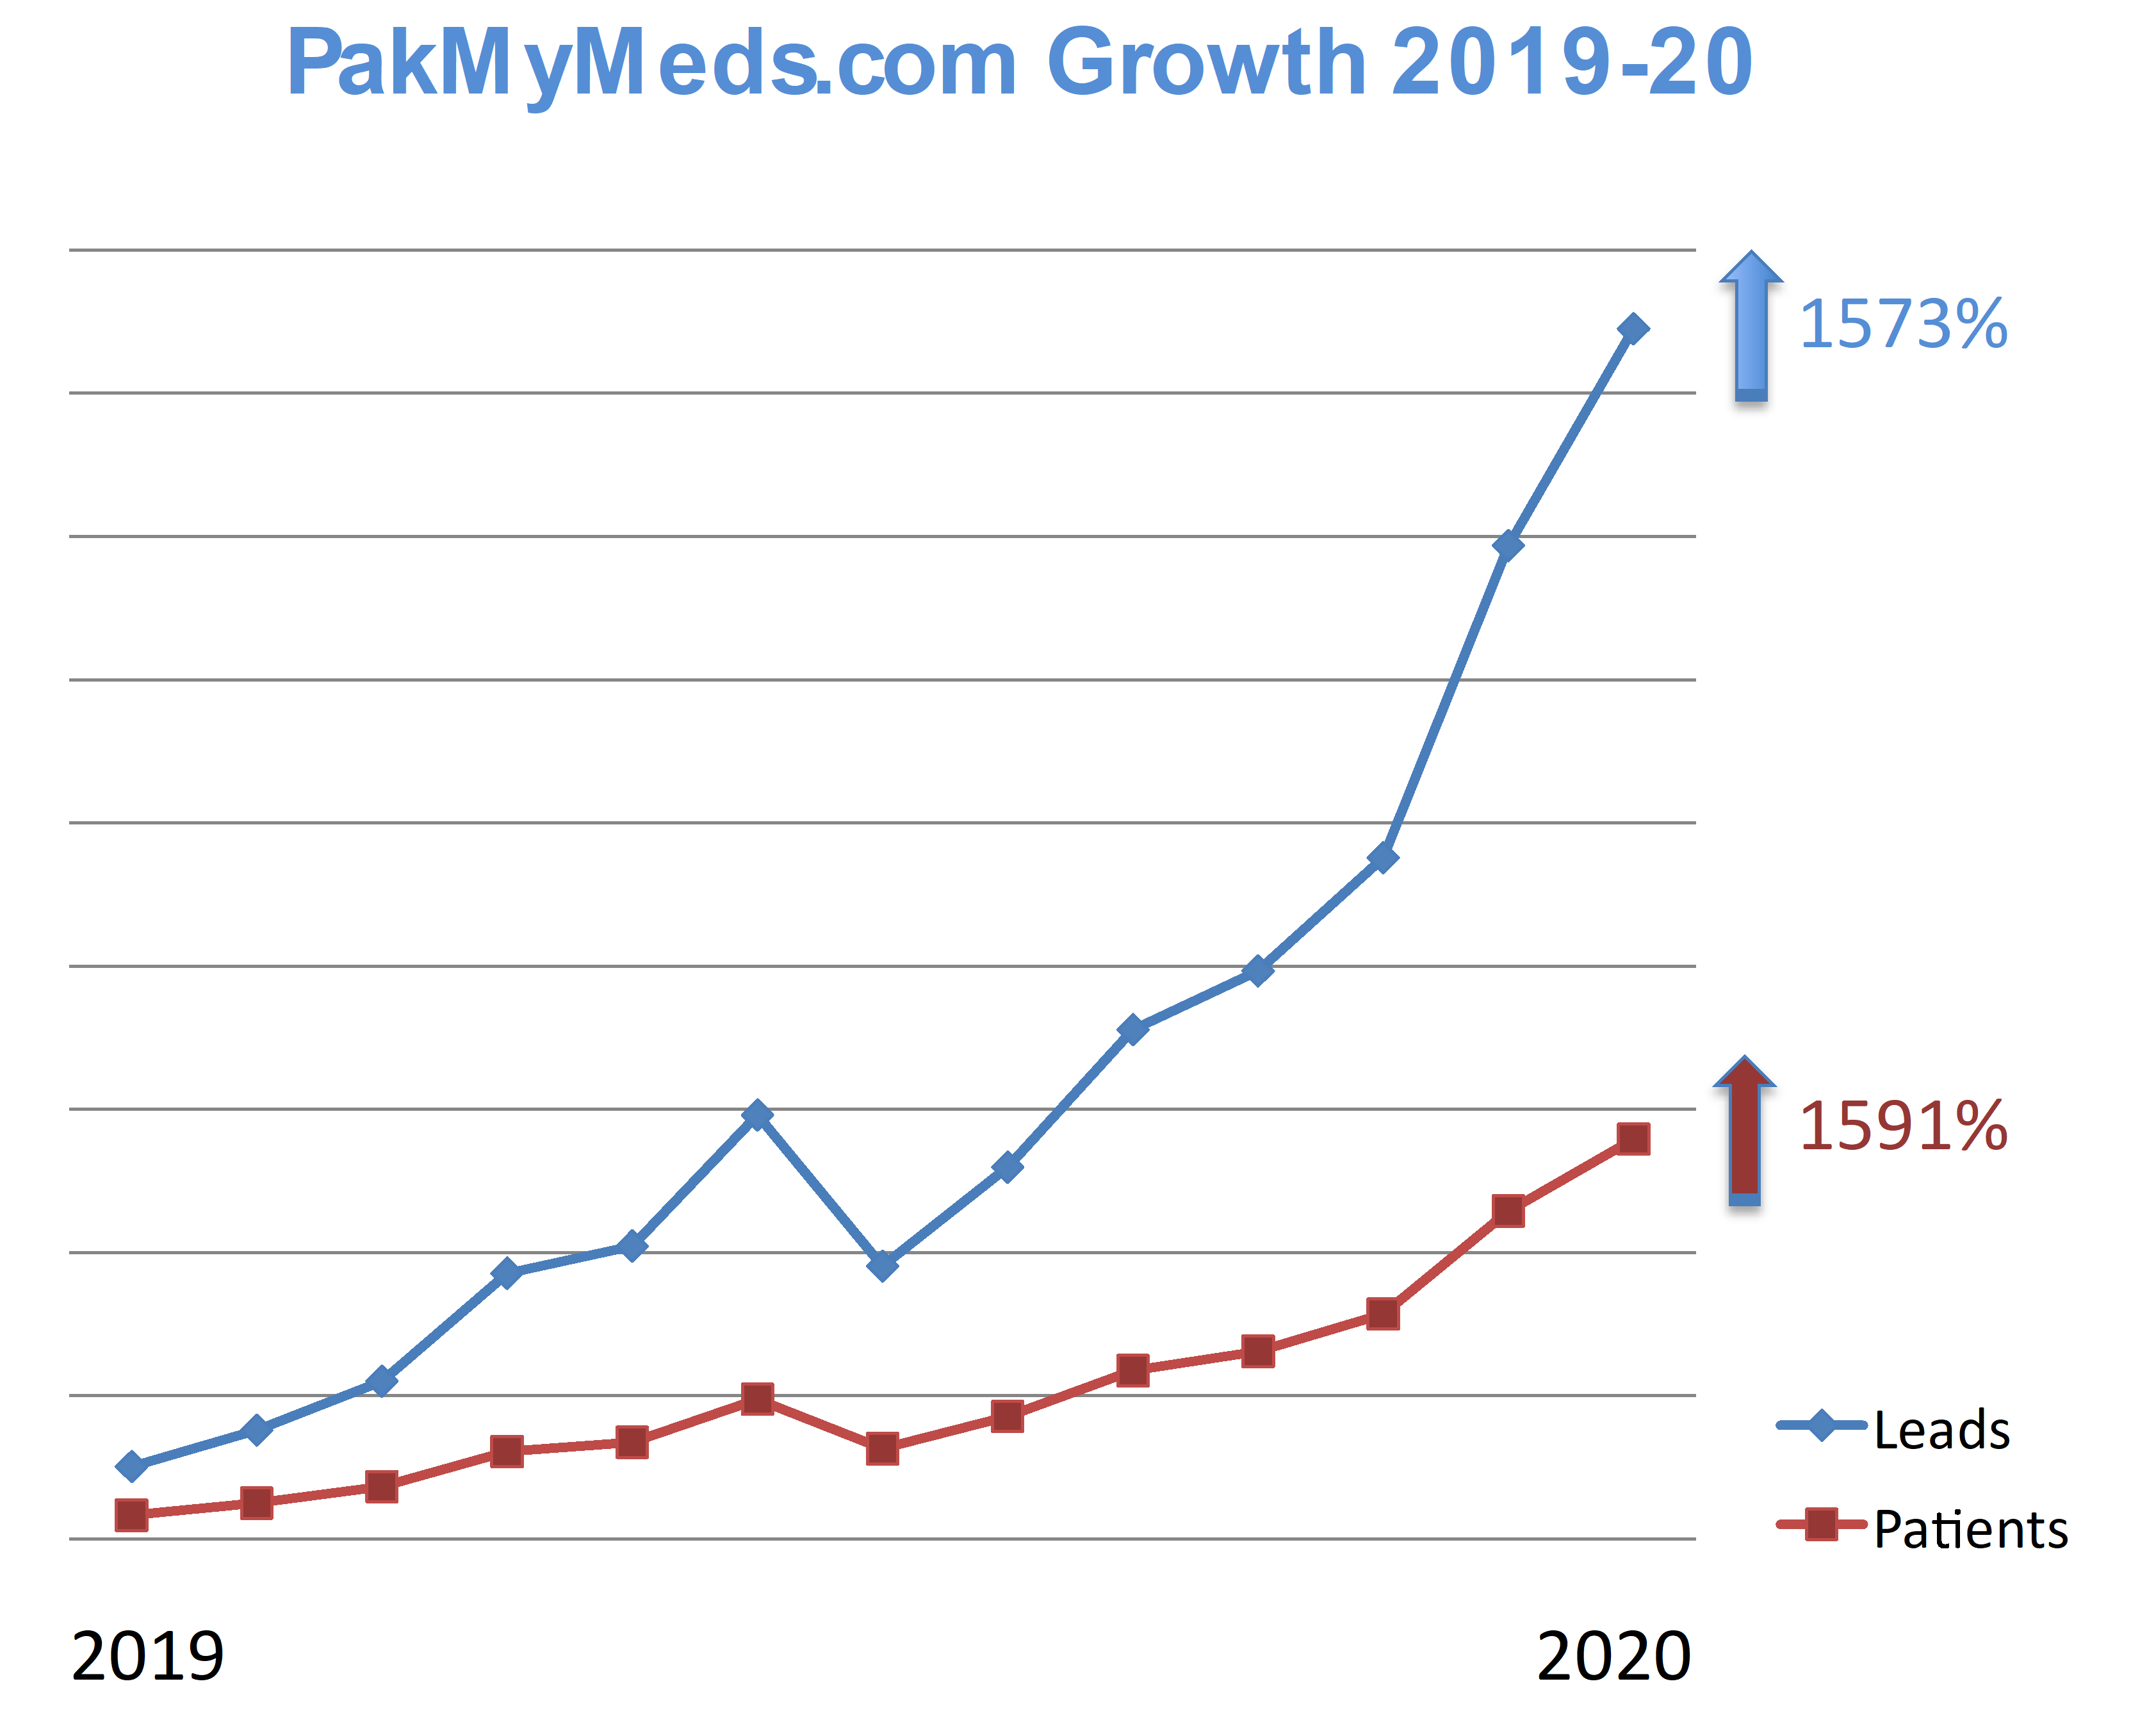 PakMyMeds growth 2019-20